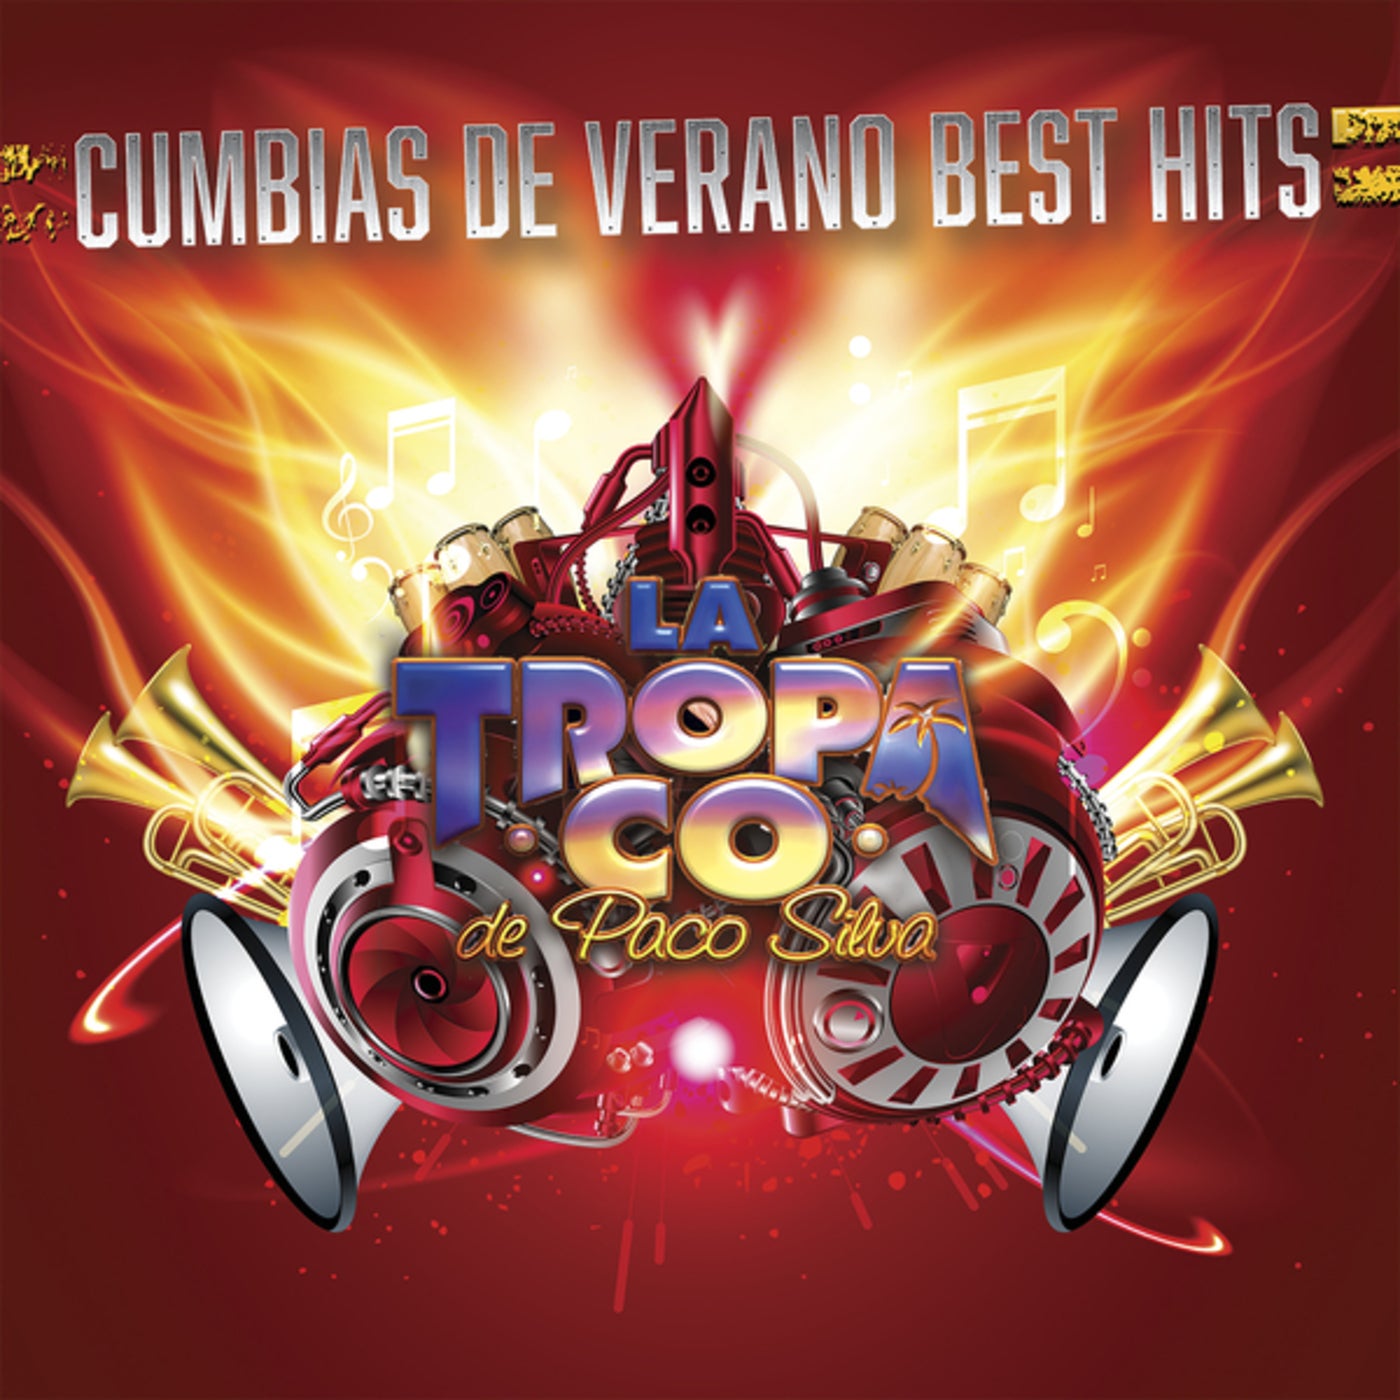 Cumbias De Verano Best Hits by La Tropa Co. De Paco Silva on Beatsource